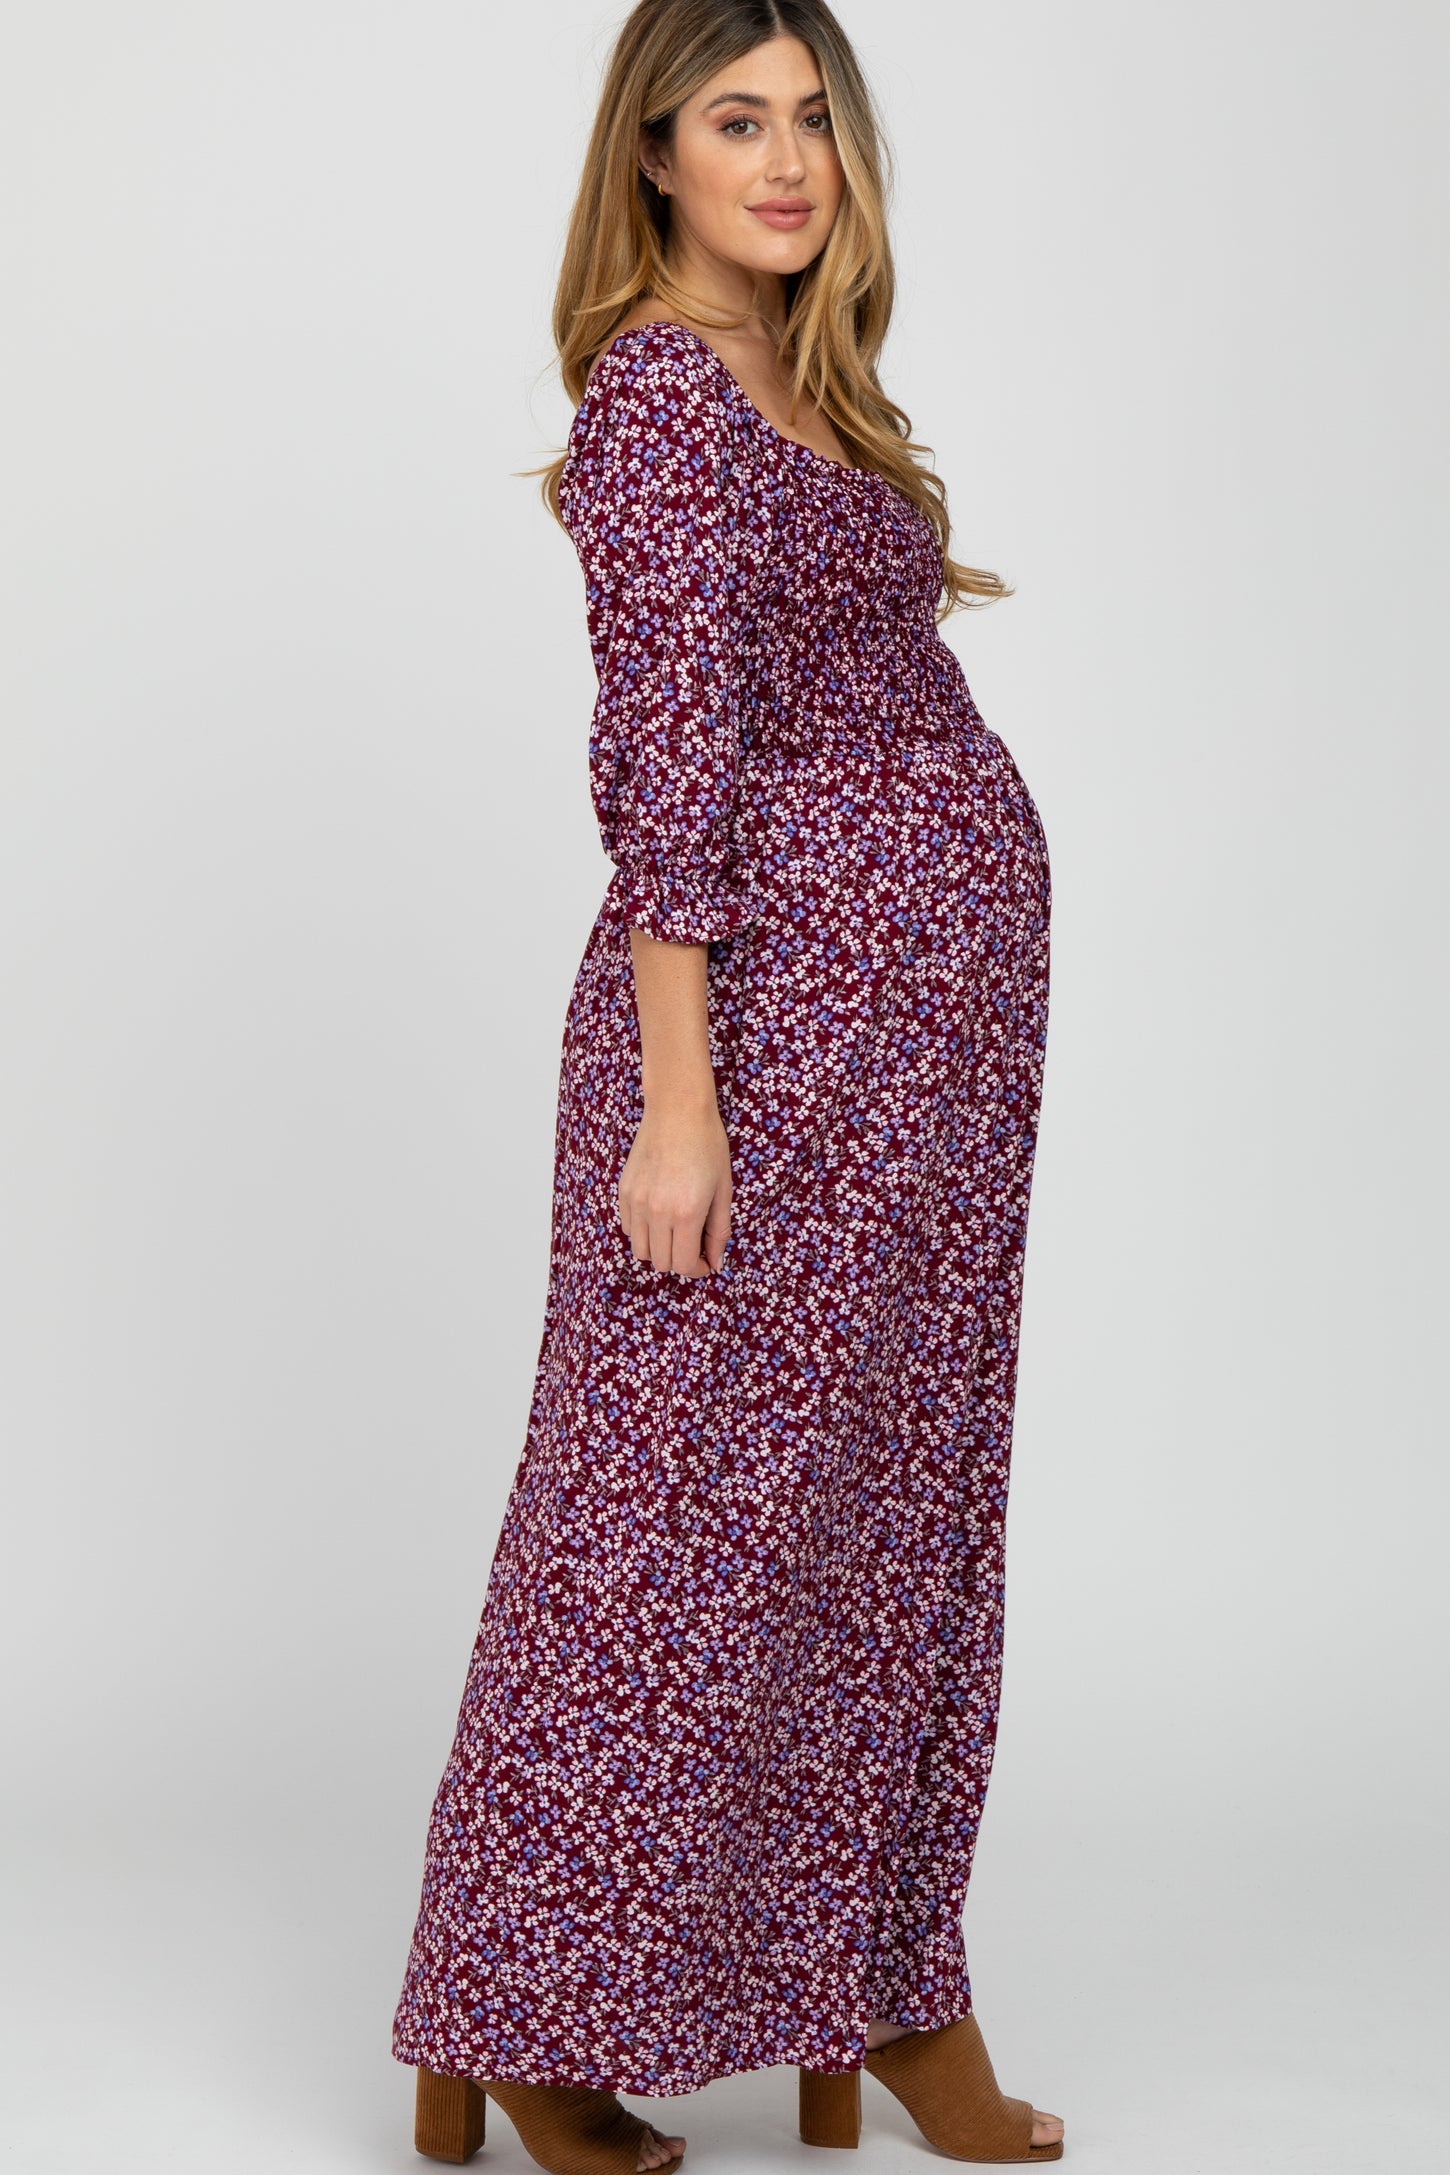 Burgundy Floral Smocked Maternity Maxi Dress – PinkBlush